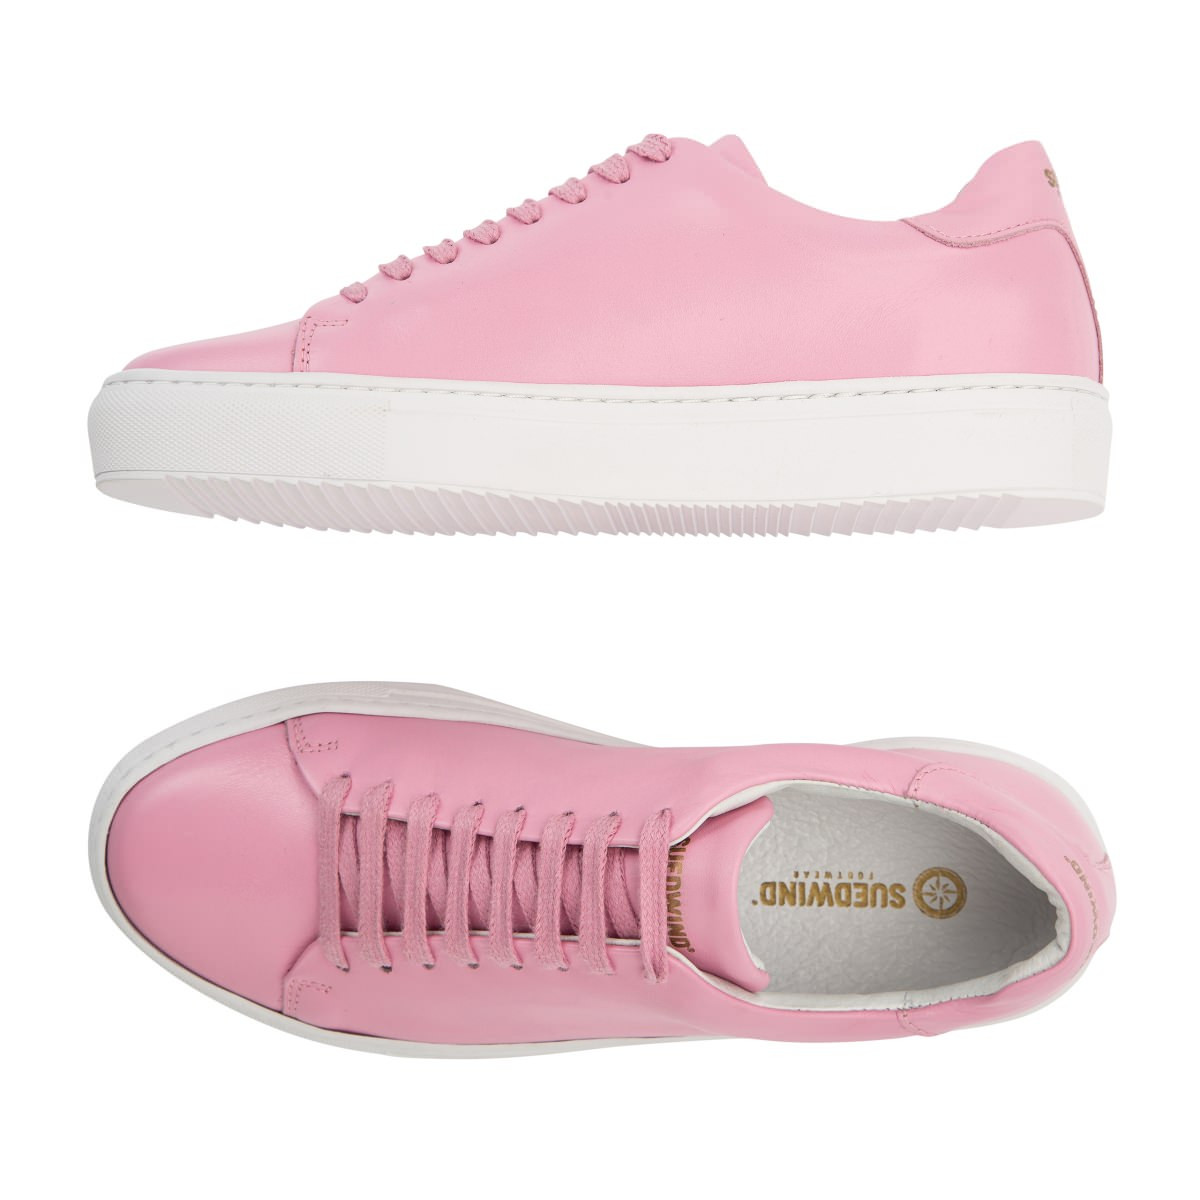 Suedwind-Ashton-Leather-Leder-Sneaker-Schuhe-Boots-Pink-10170027-07_1280x1280